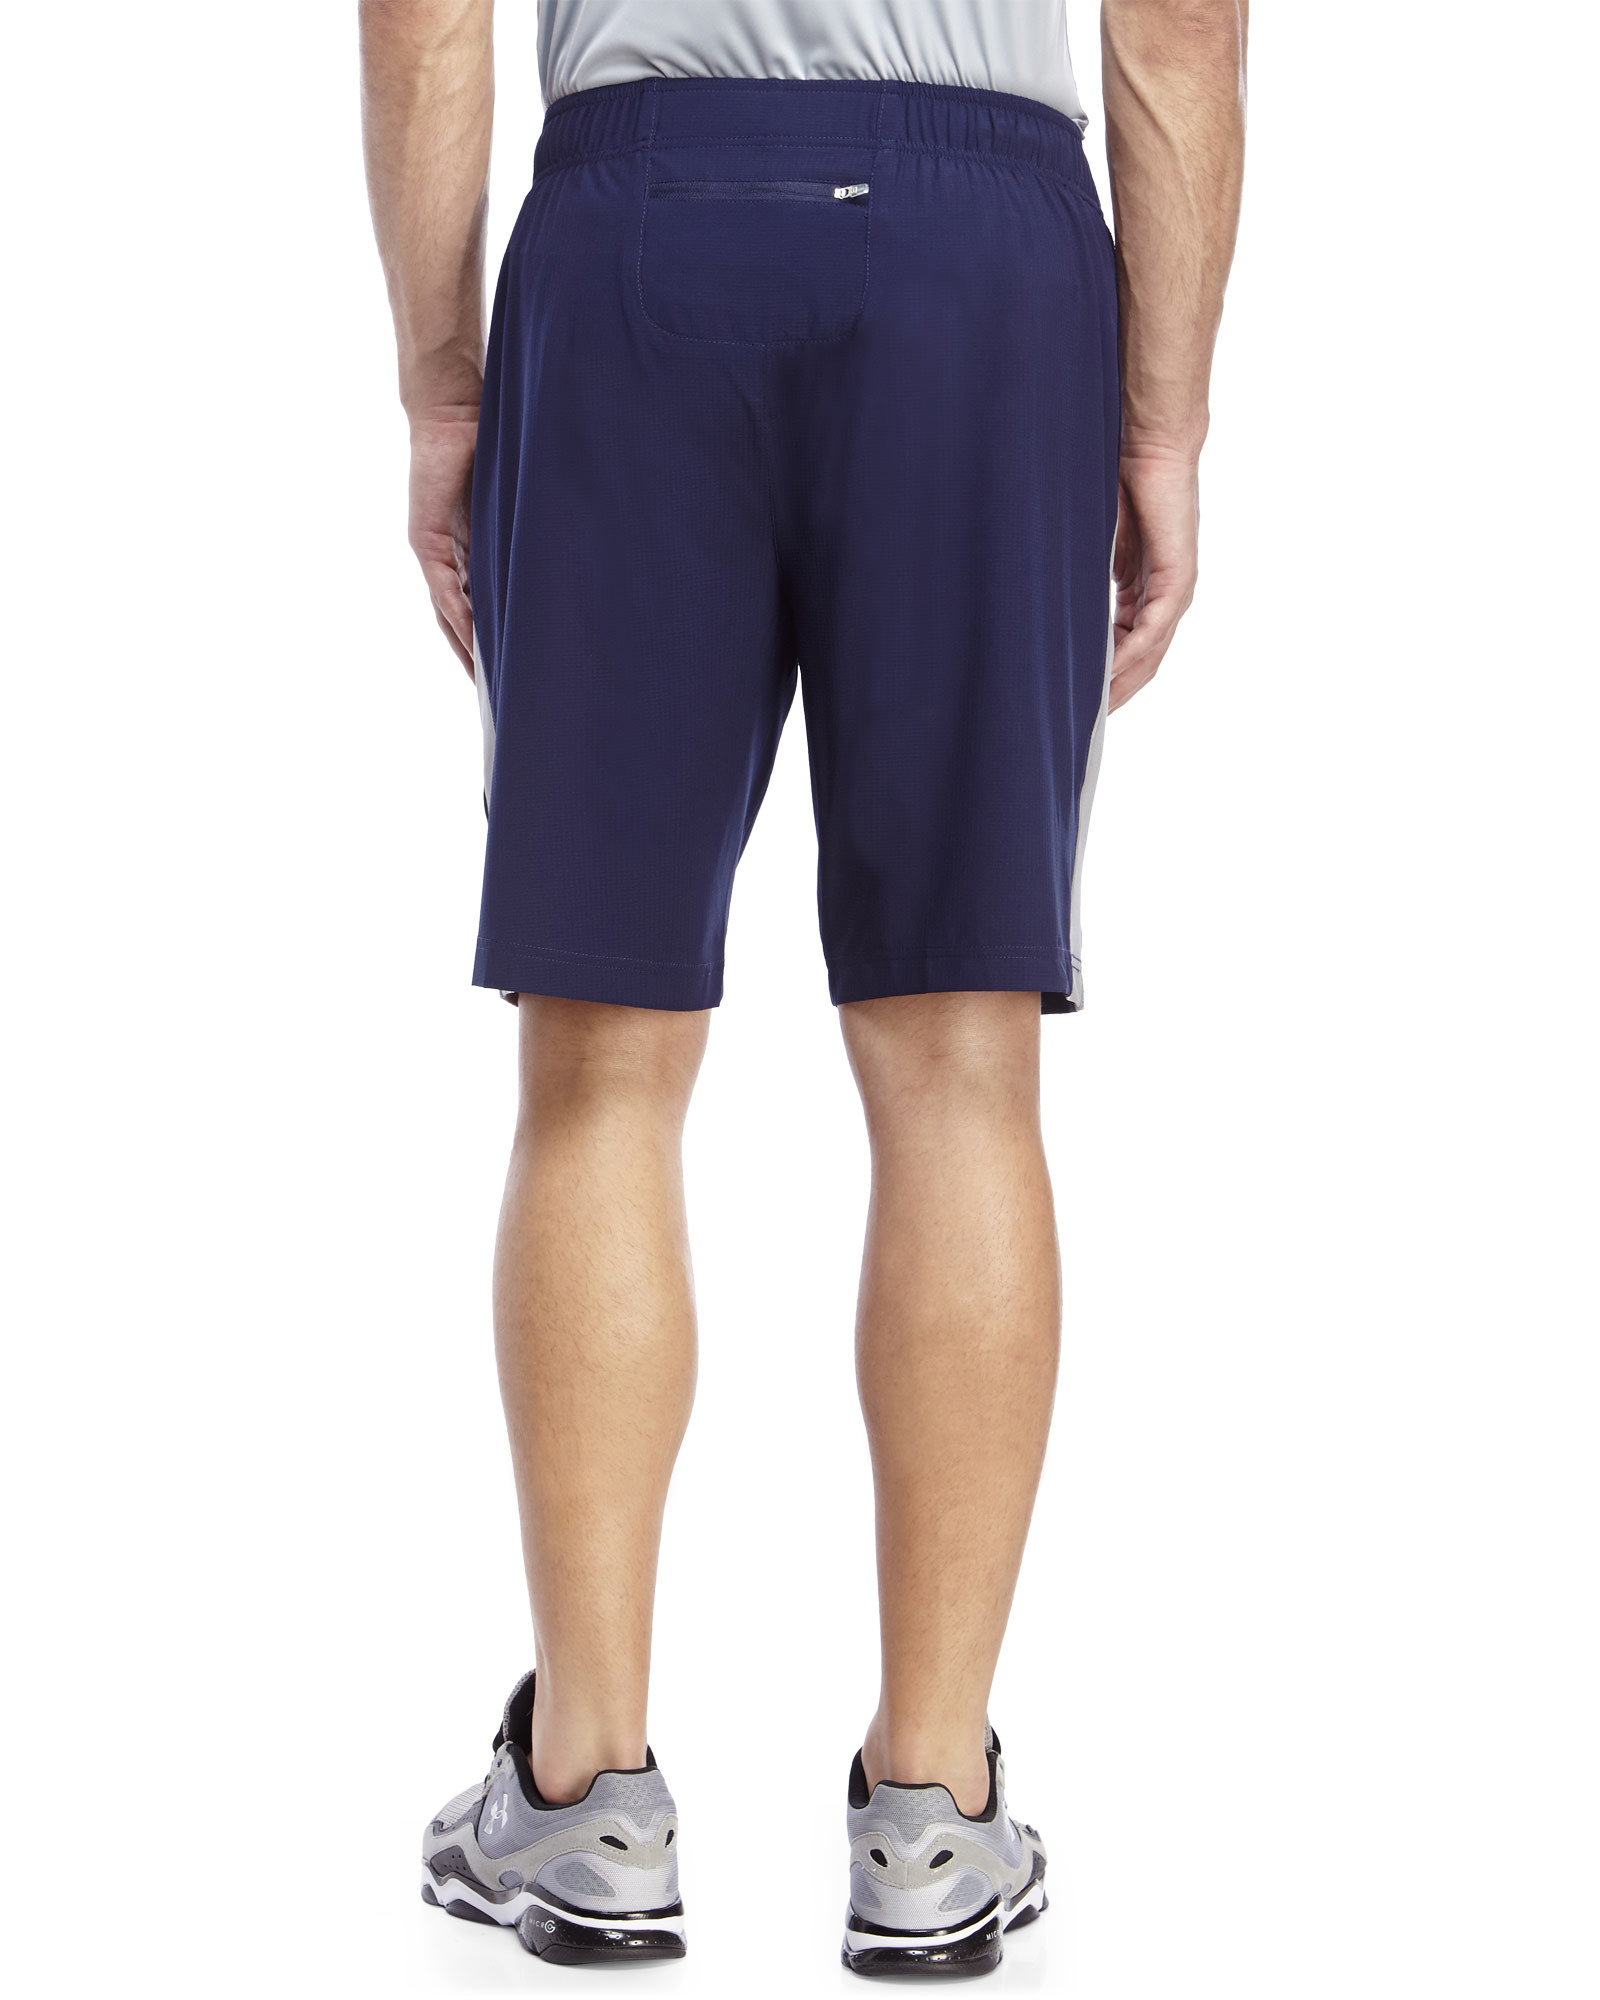 Lyst - Reebok Navy & Light Grey Rip Curl Slim Fit Shorts in Blue for Men